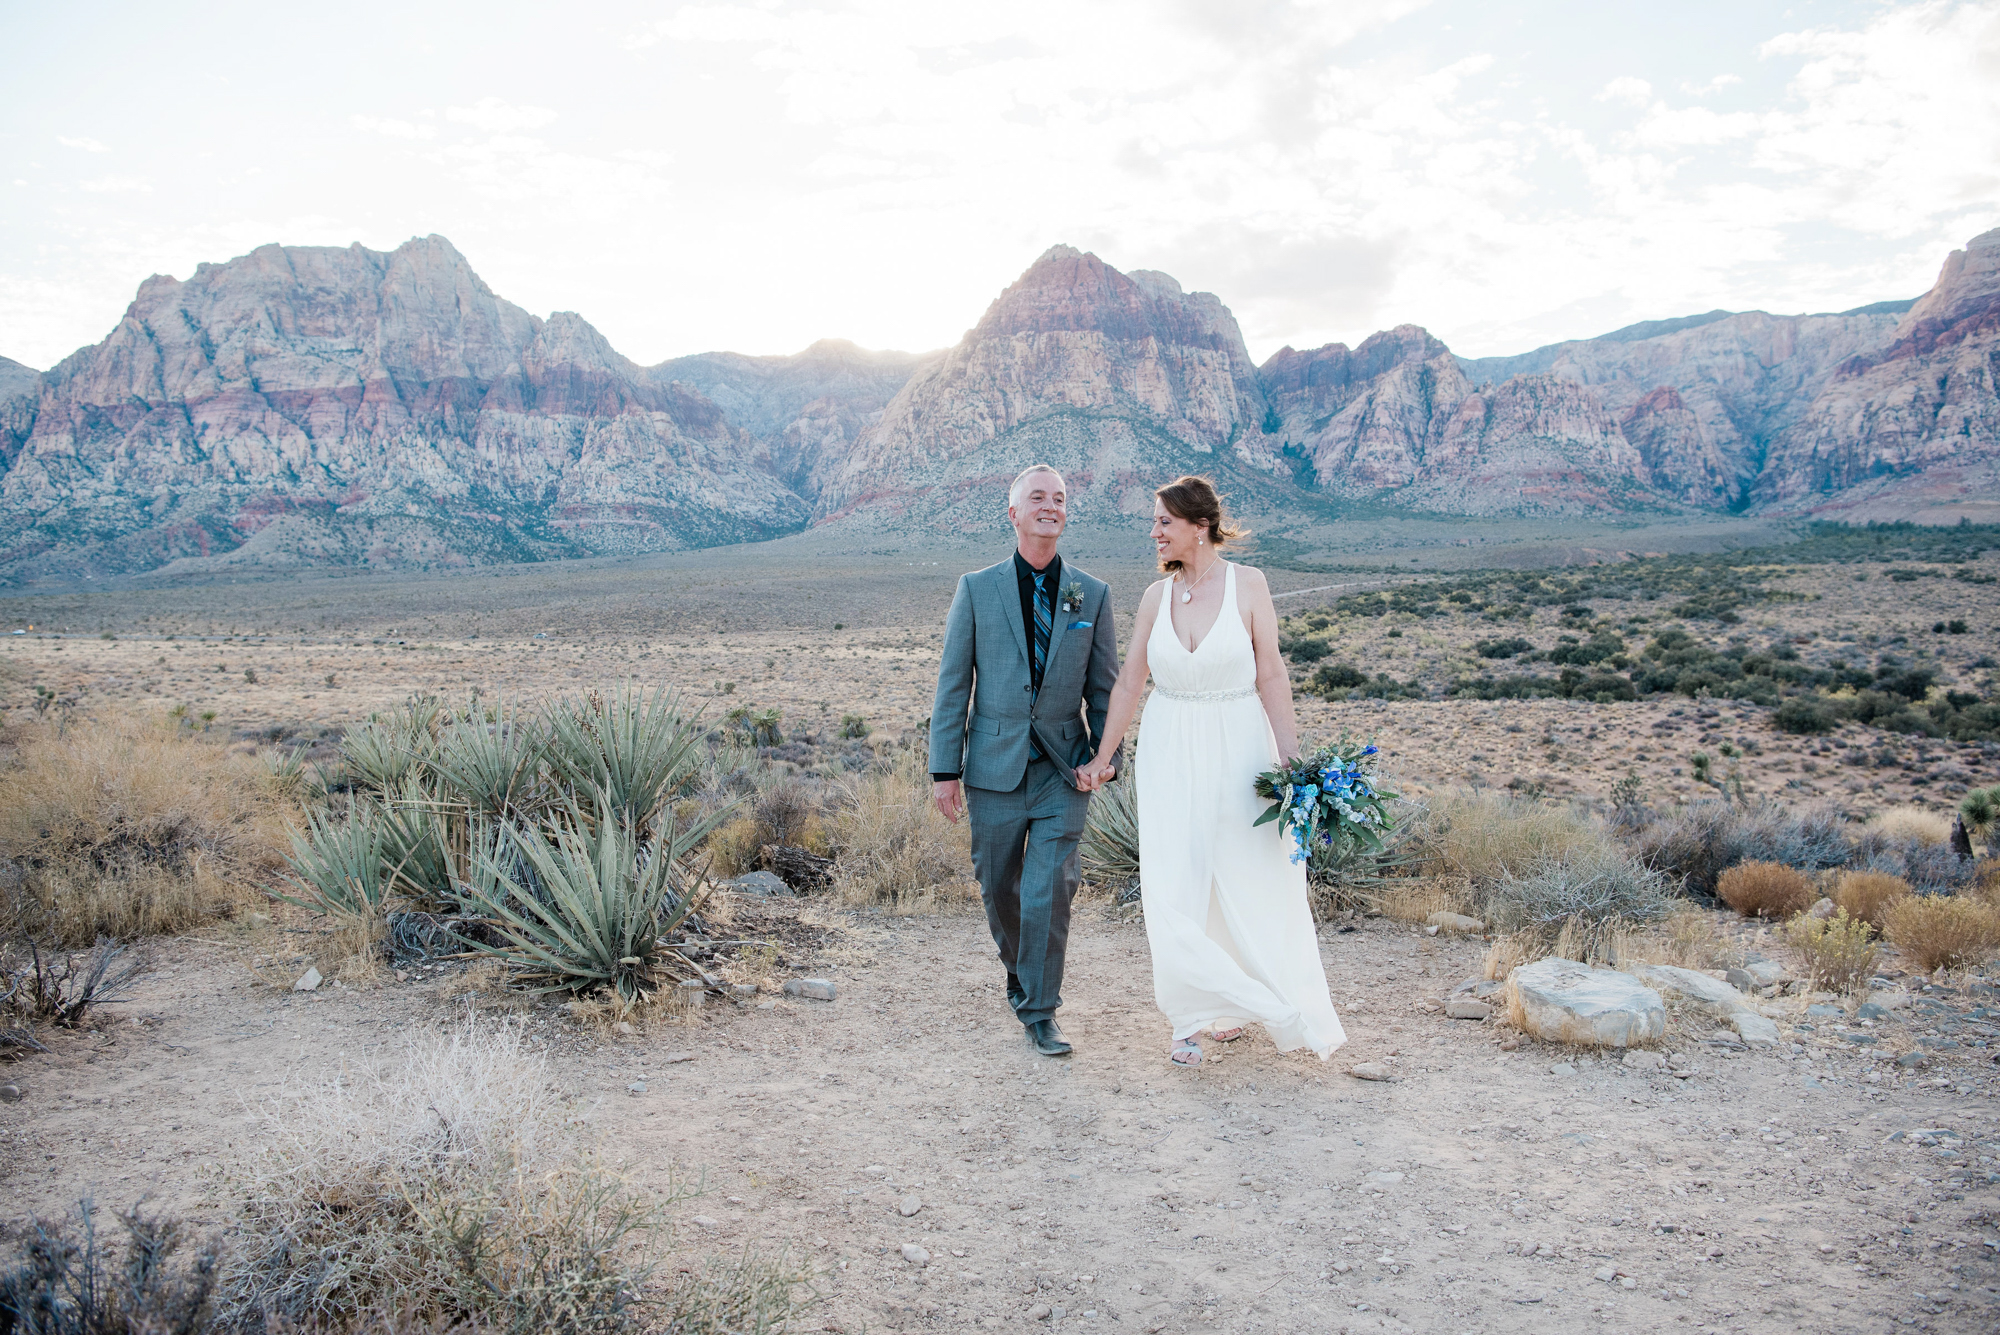 Kristin + Robert: A Real Wedding in Cactus Joe’s